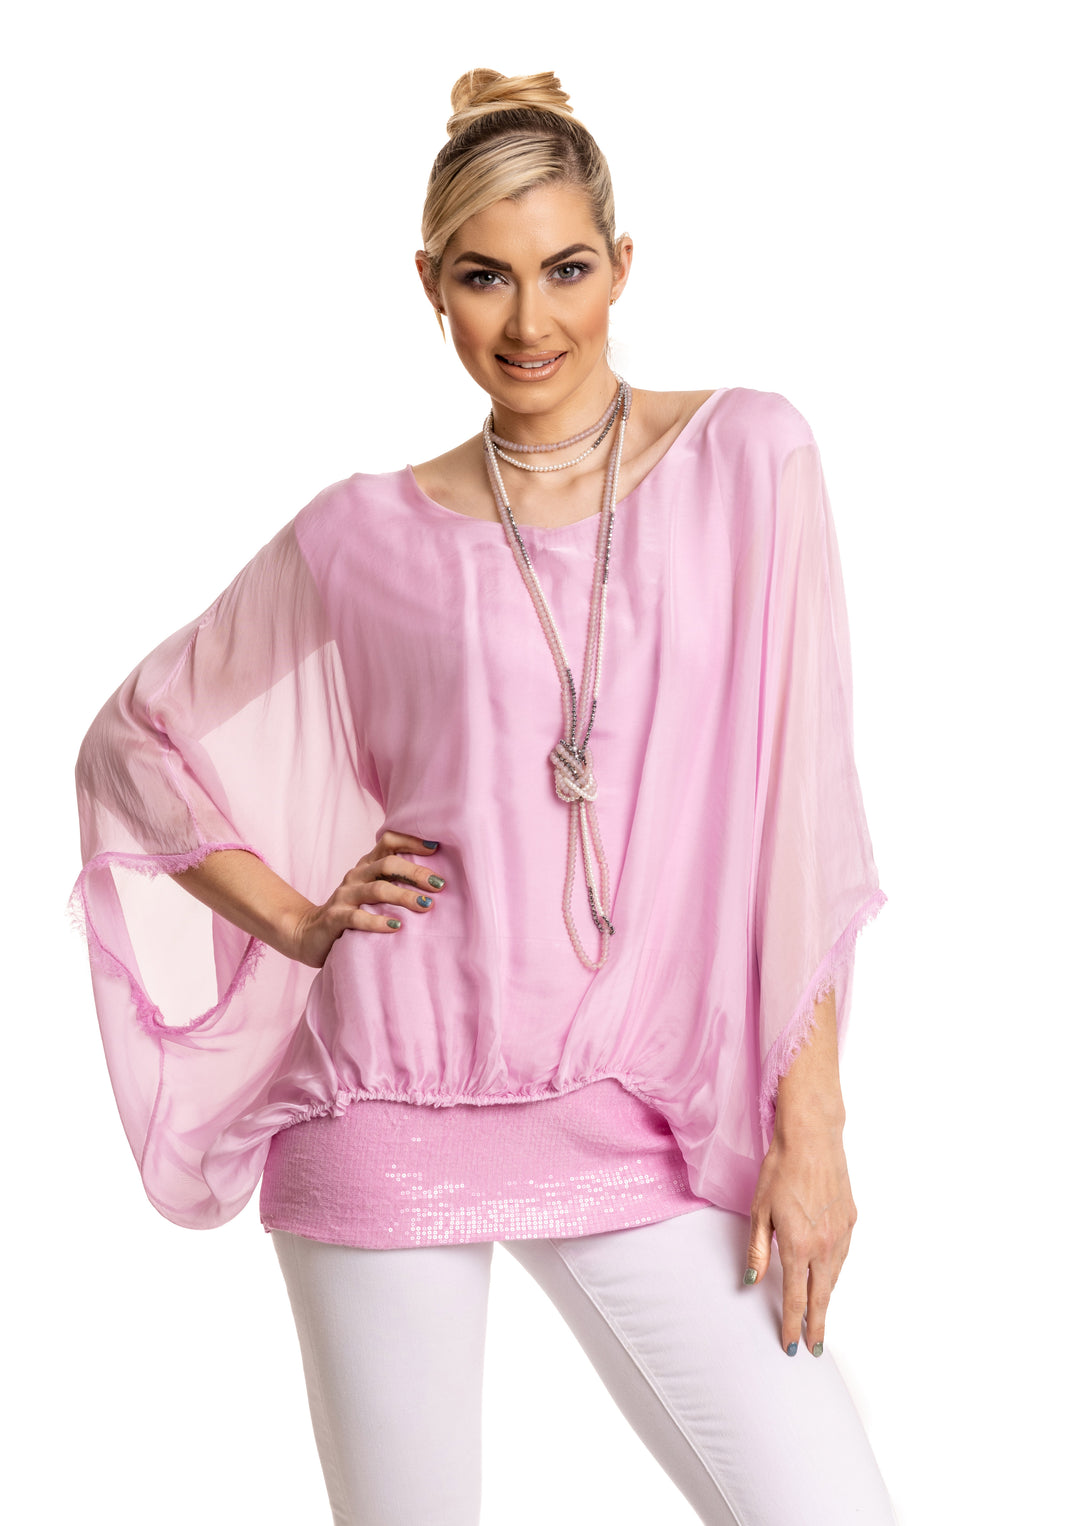 Marcella Top in Petal Pink - Imagine Fashion